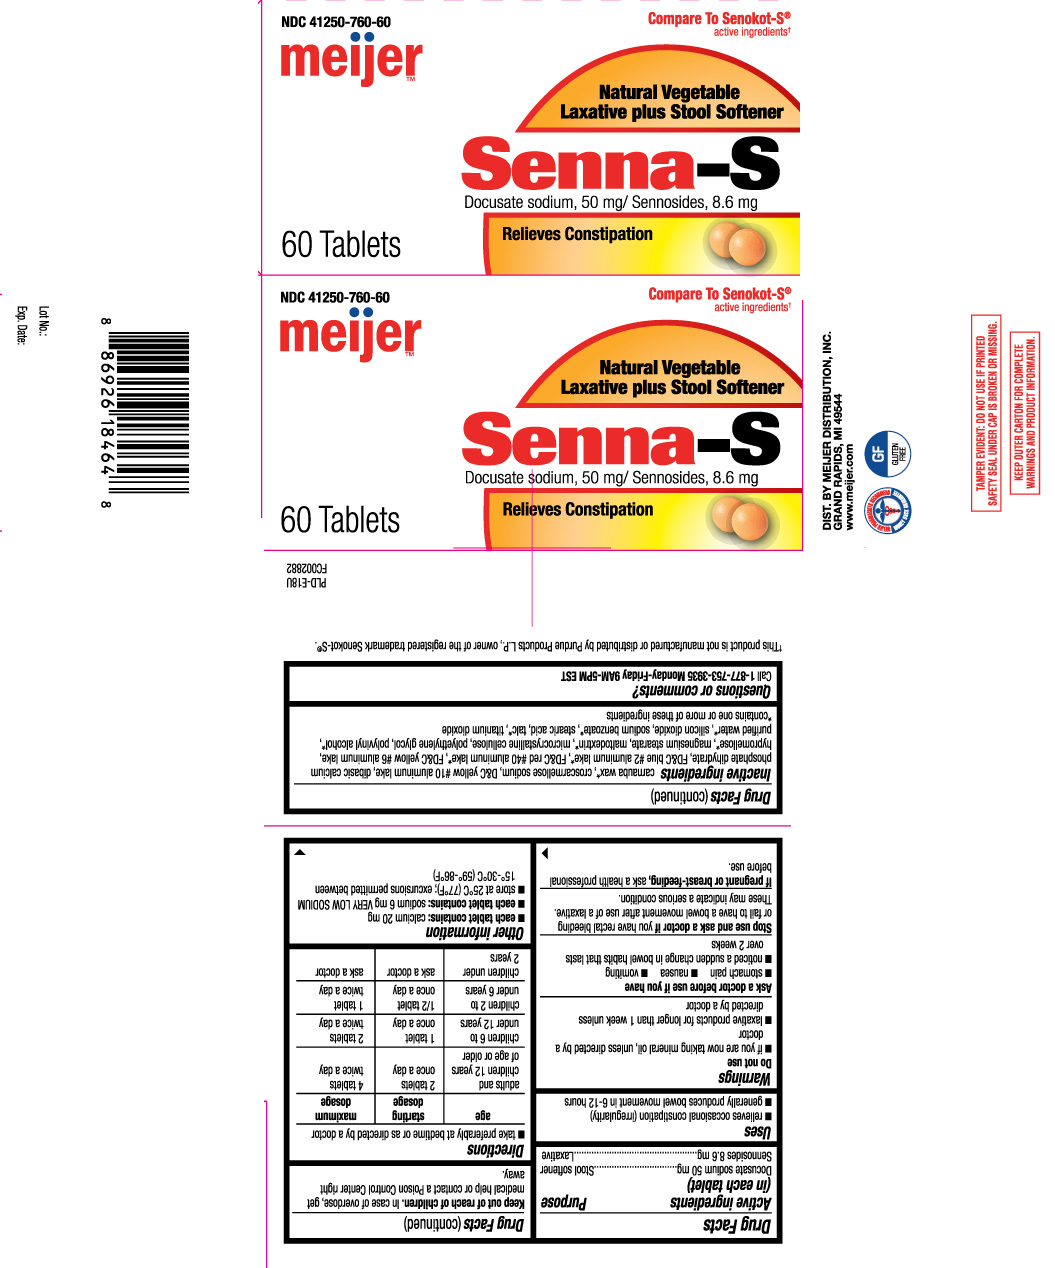 Docusate Sodium 50 mg Sennosides 8.6 mg